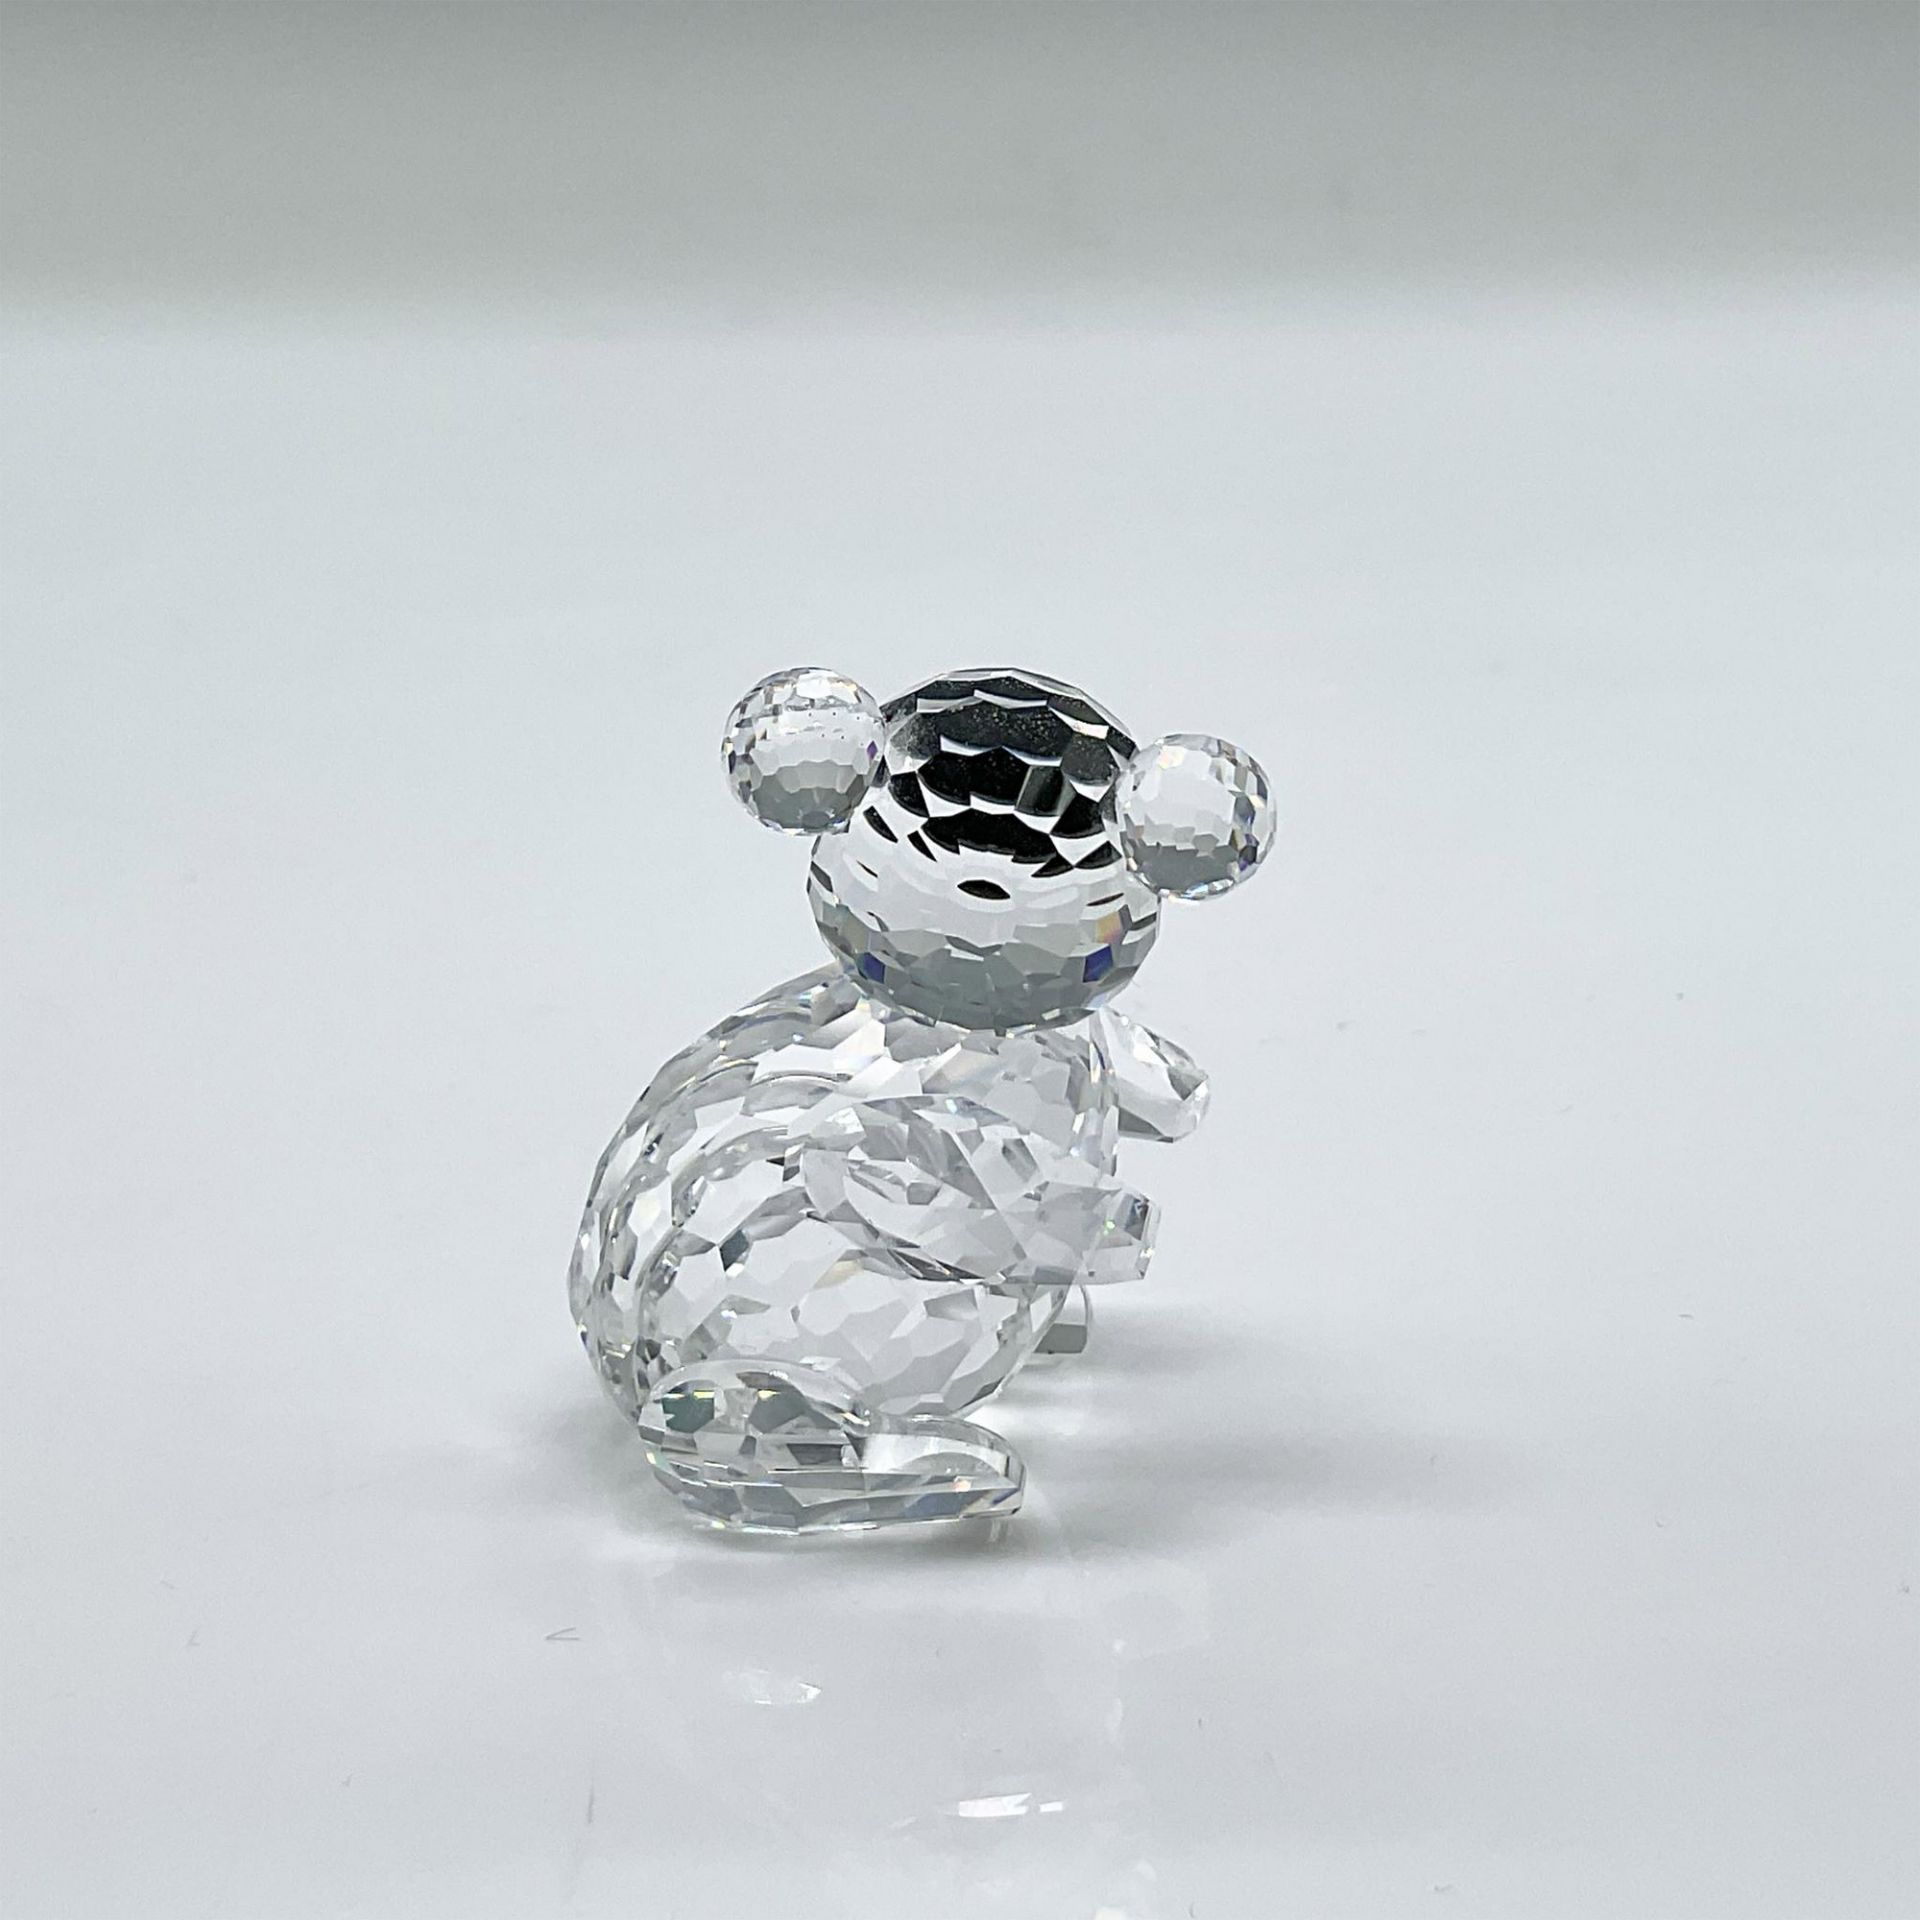 Swarovski Silver Crystal Figurine, Koala - Image 2 of 4